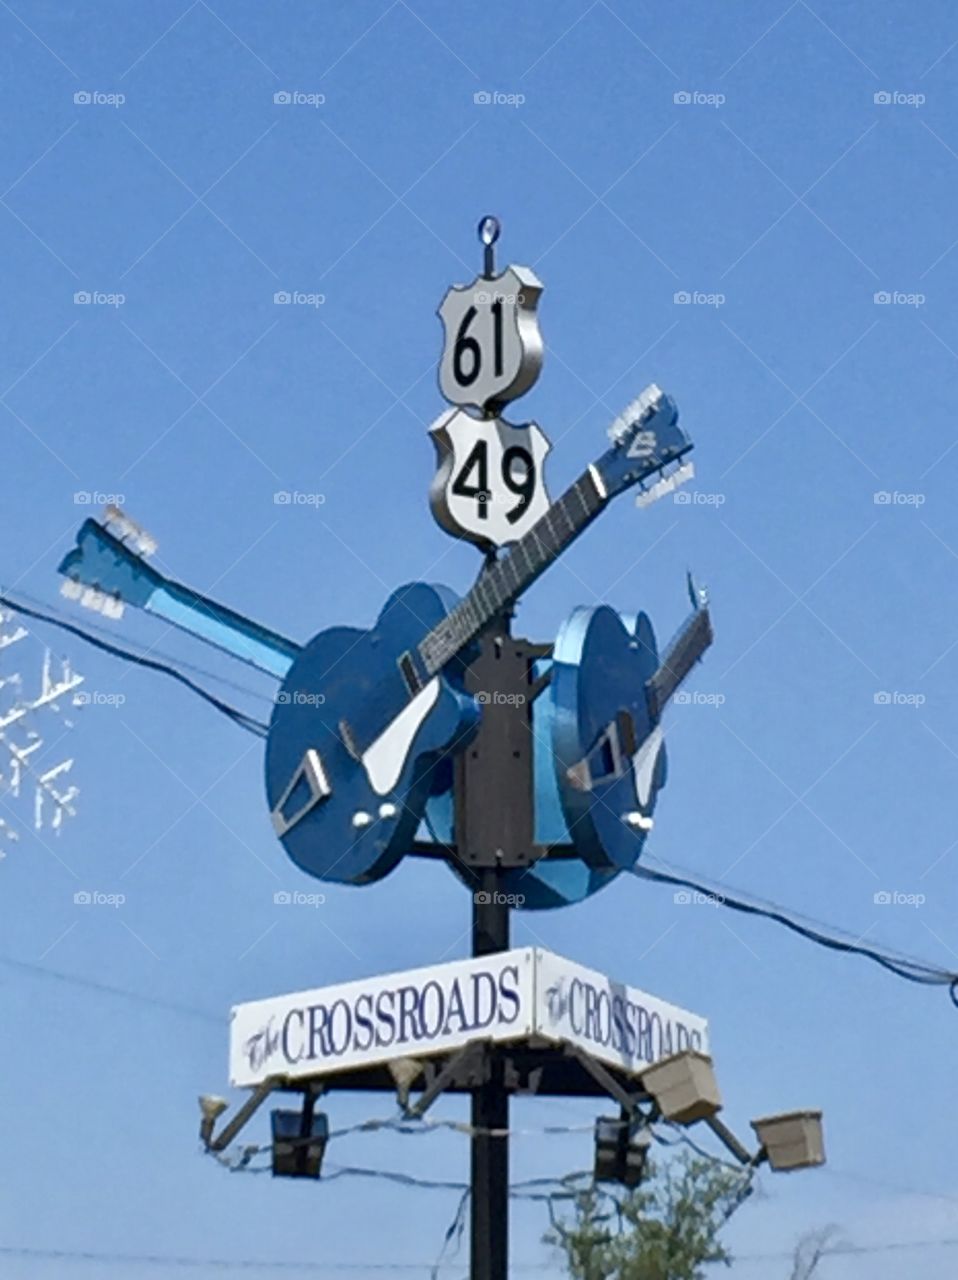 The Crossroads Clarksdale, MS.